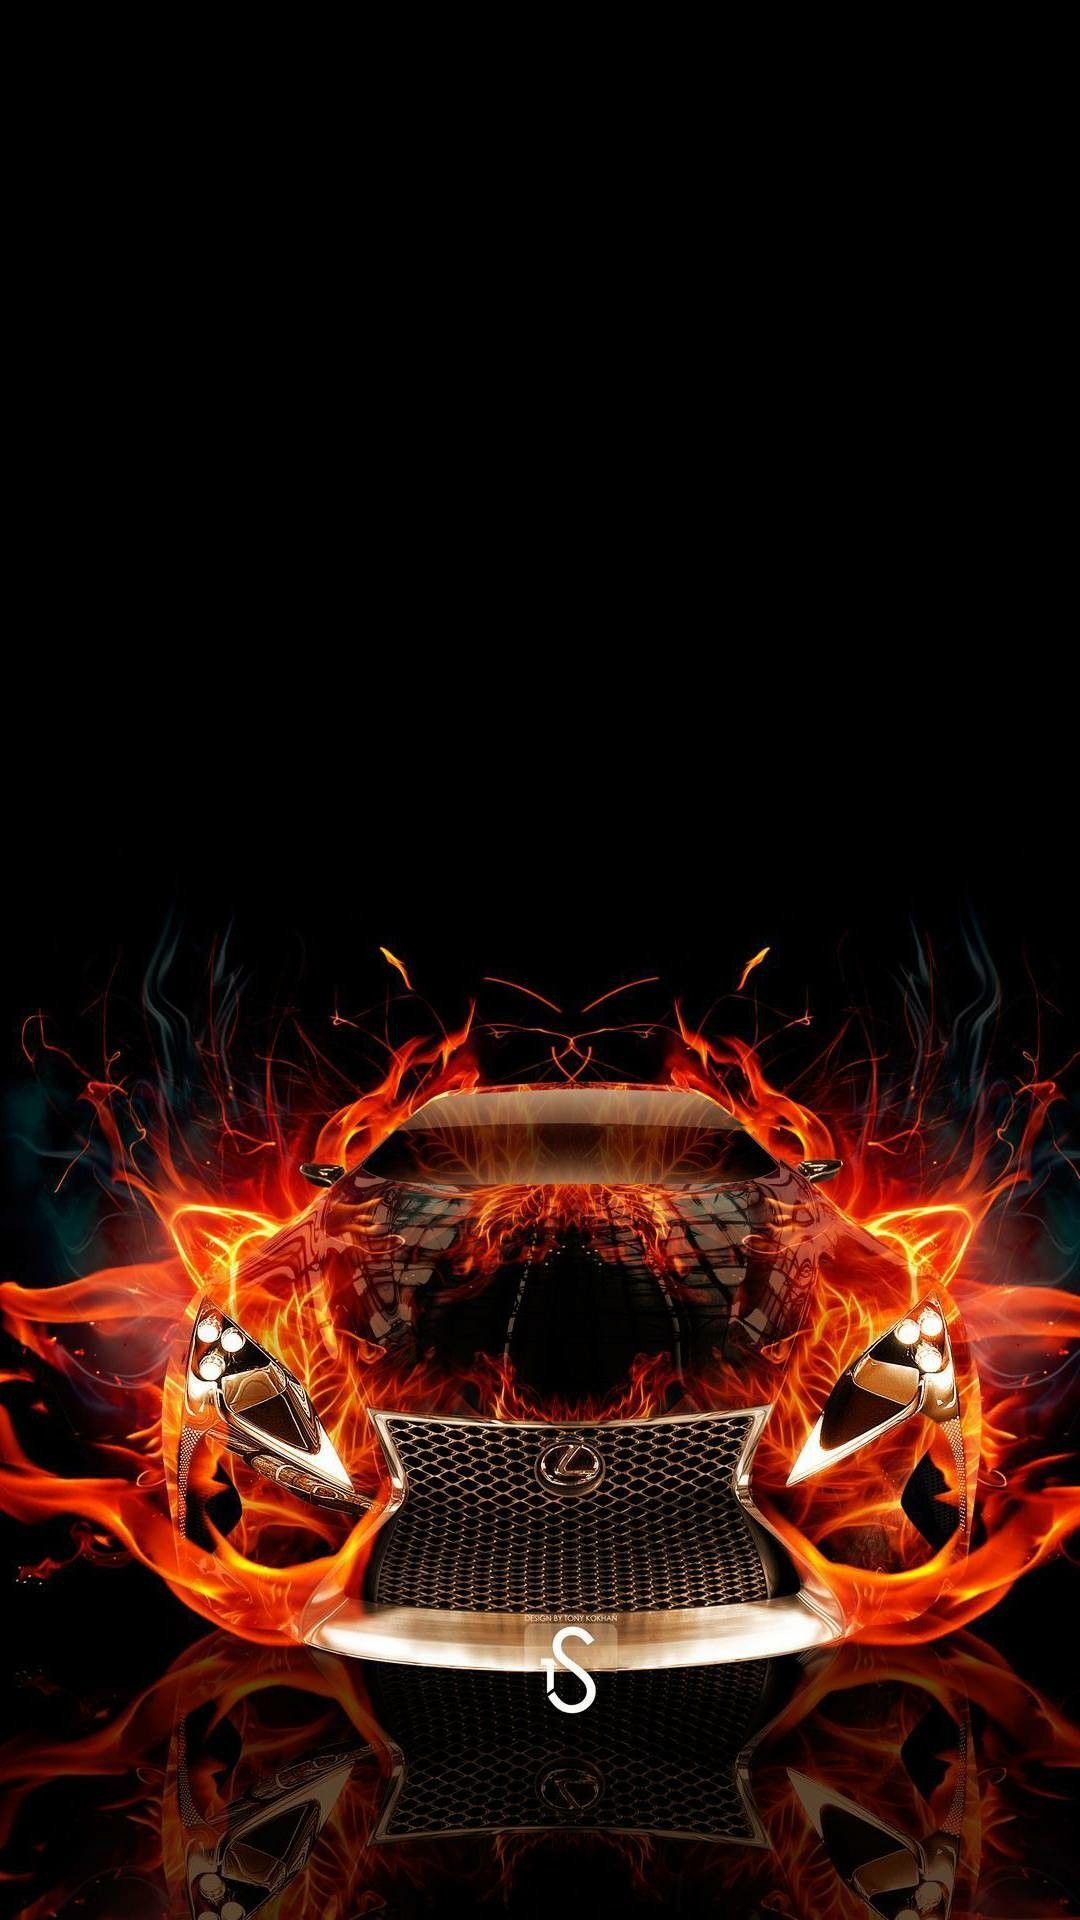 Fire car. Car wallpaper, Sports car wallpaper, Sports cars luxury